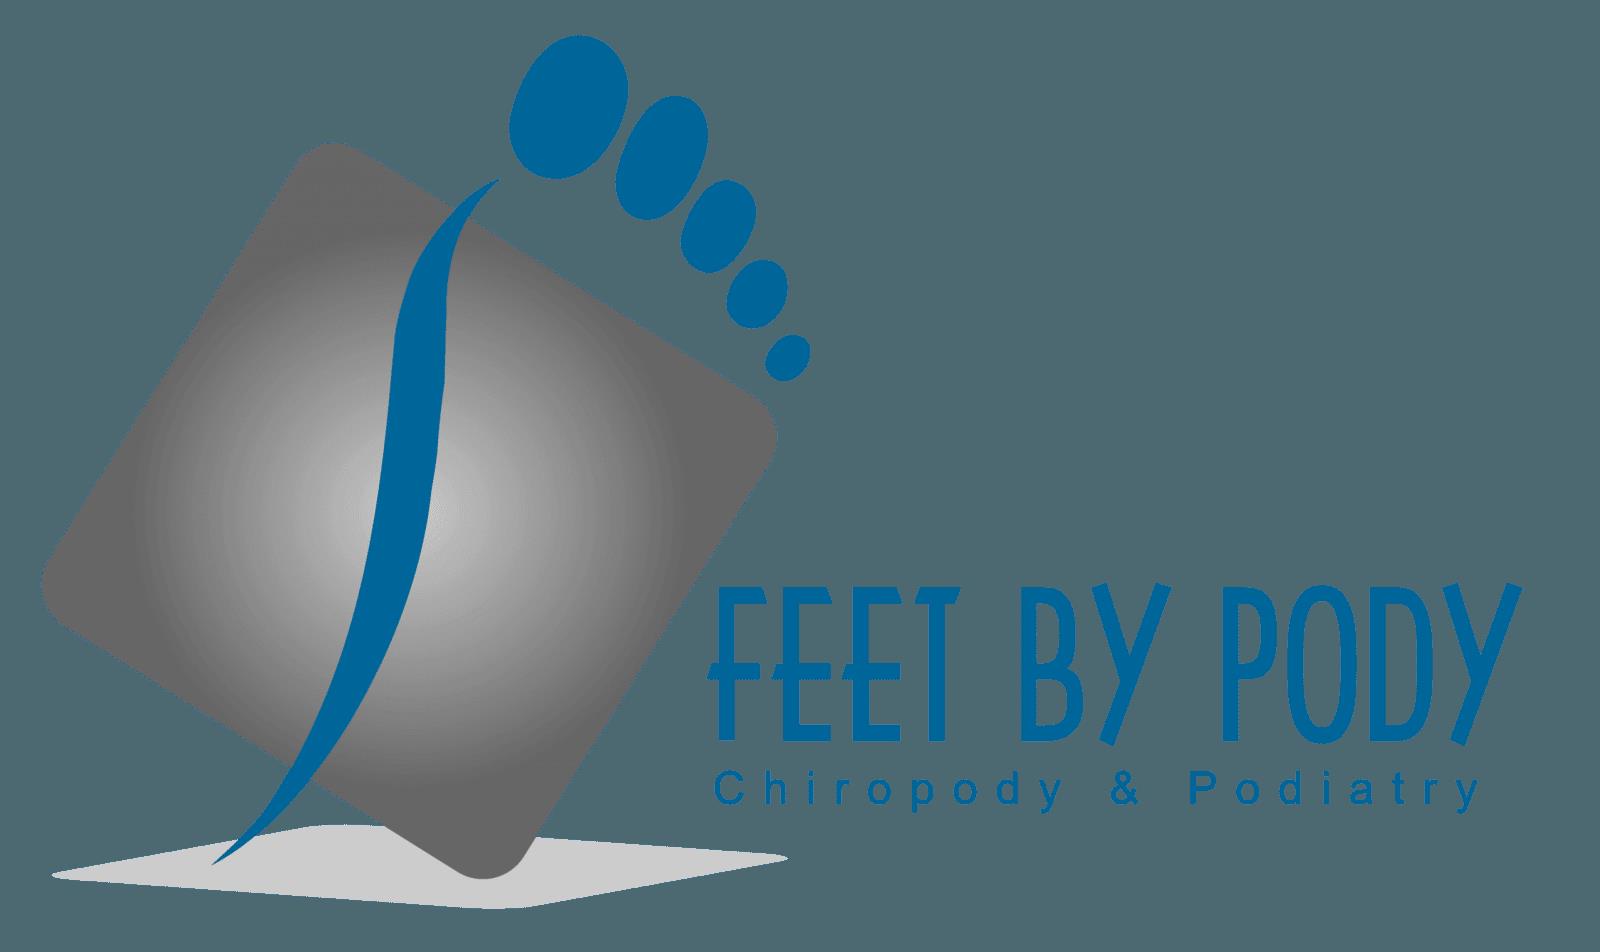 Feet By Pody